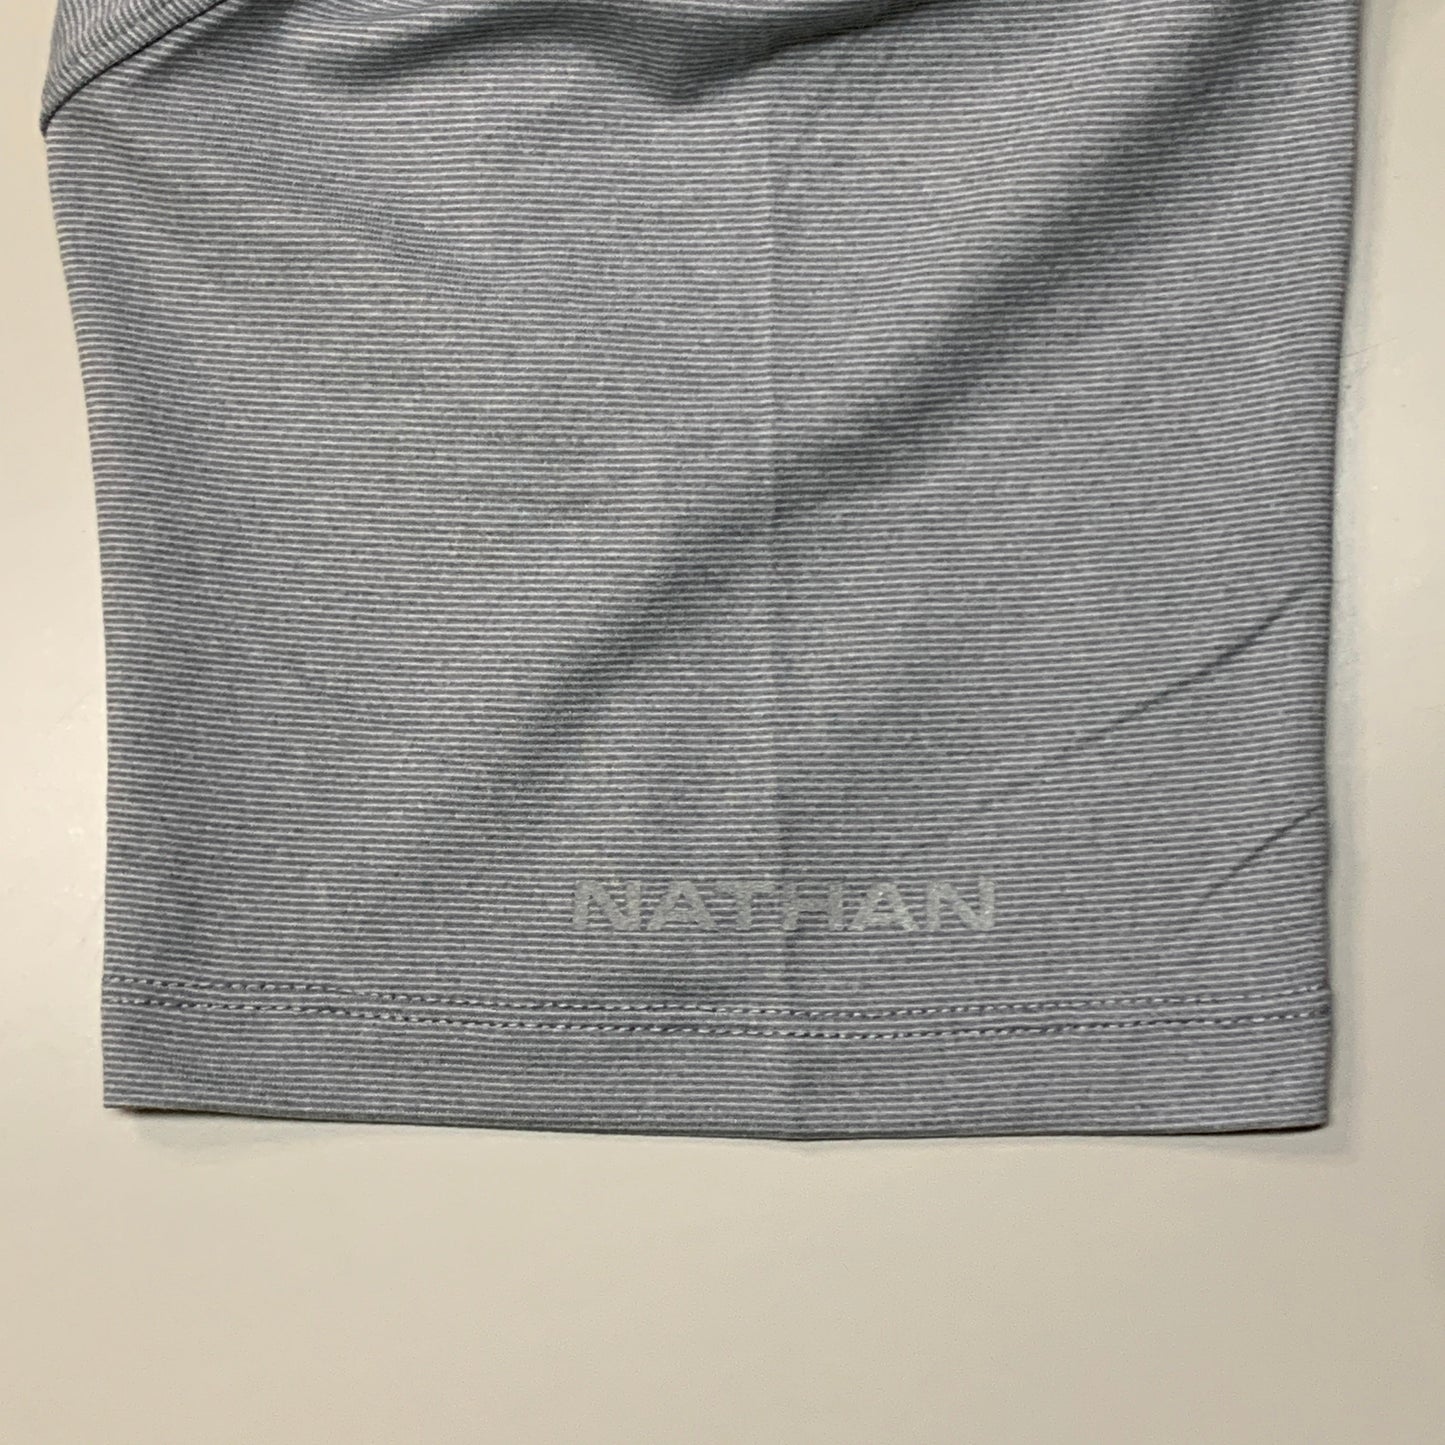 NATHAN Dash Tee Short Sleeve Shirt Monument Grey Stripe SZ XL NS50920-80130-XL